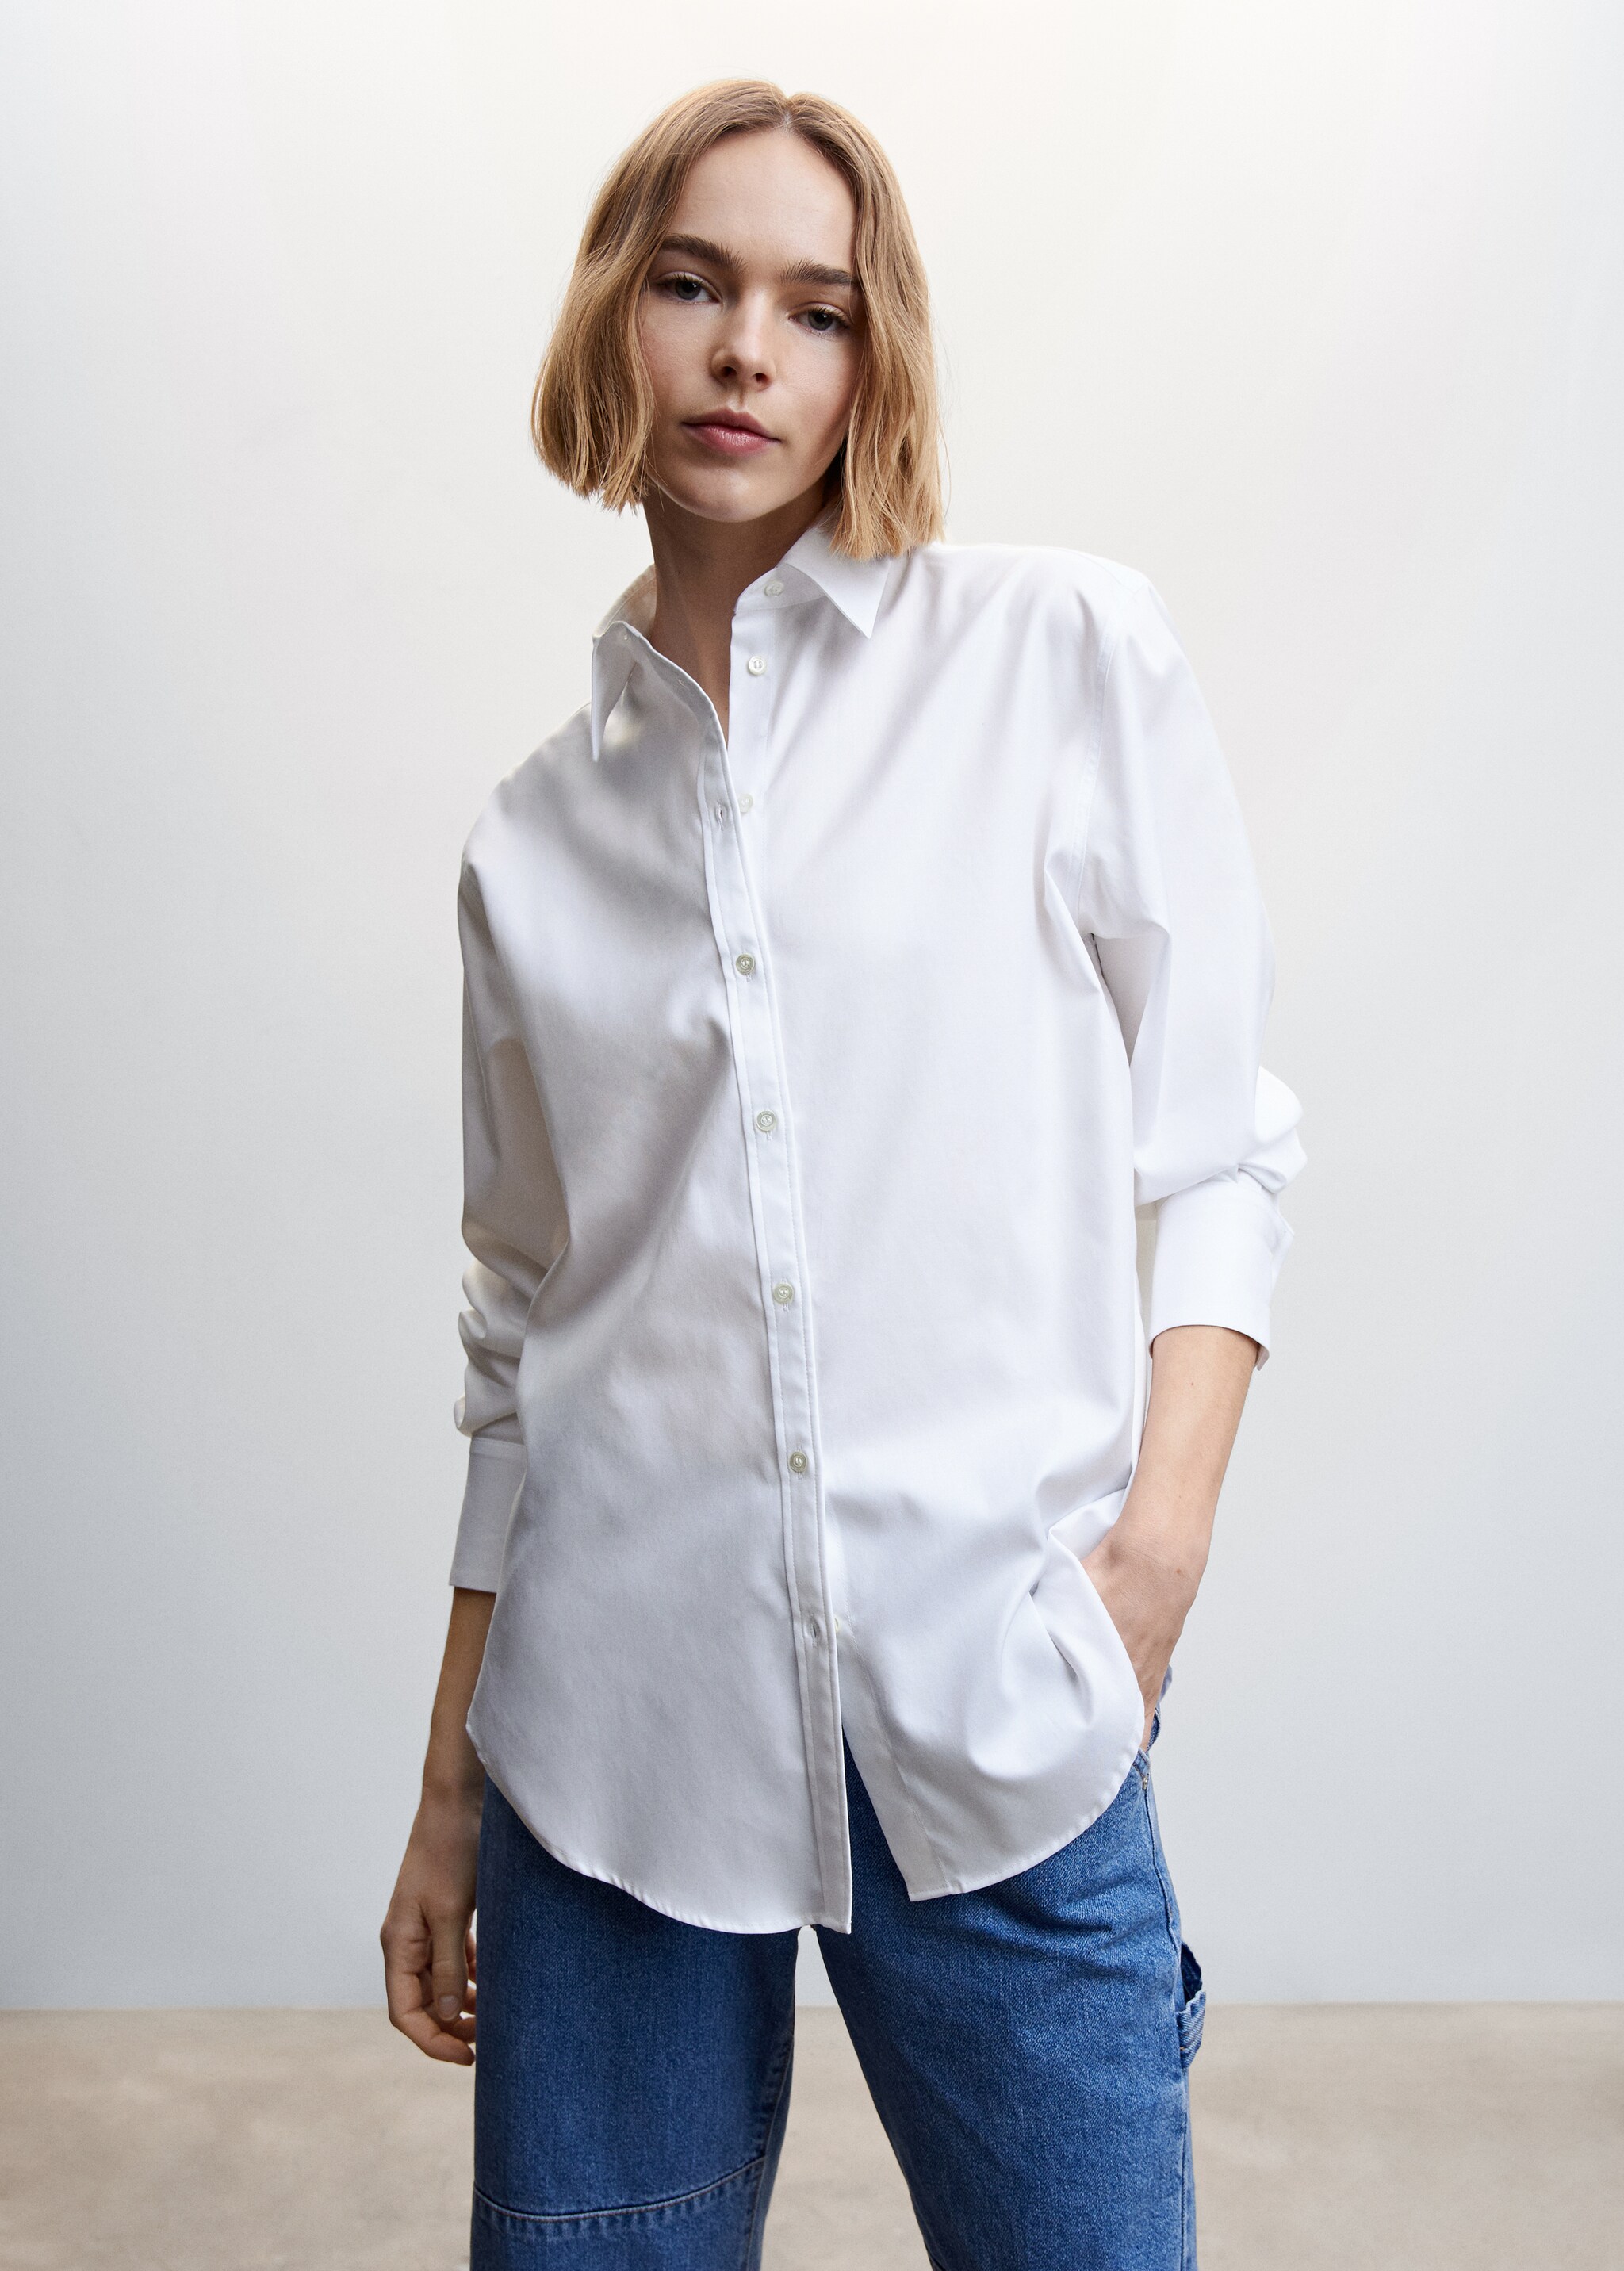 Oversize cotton shirt - Medium plane